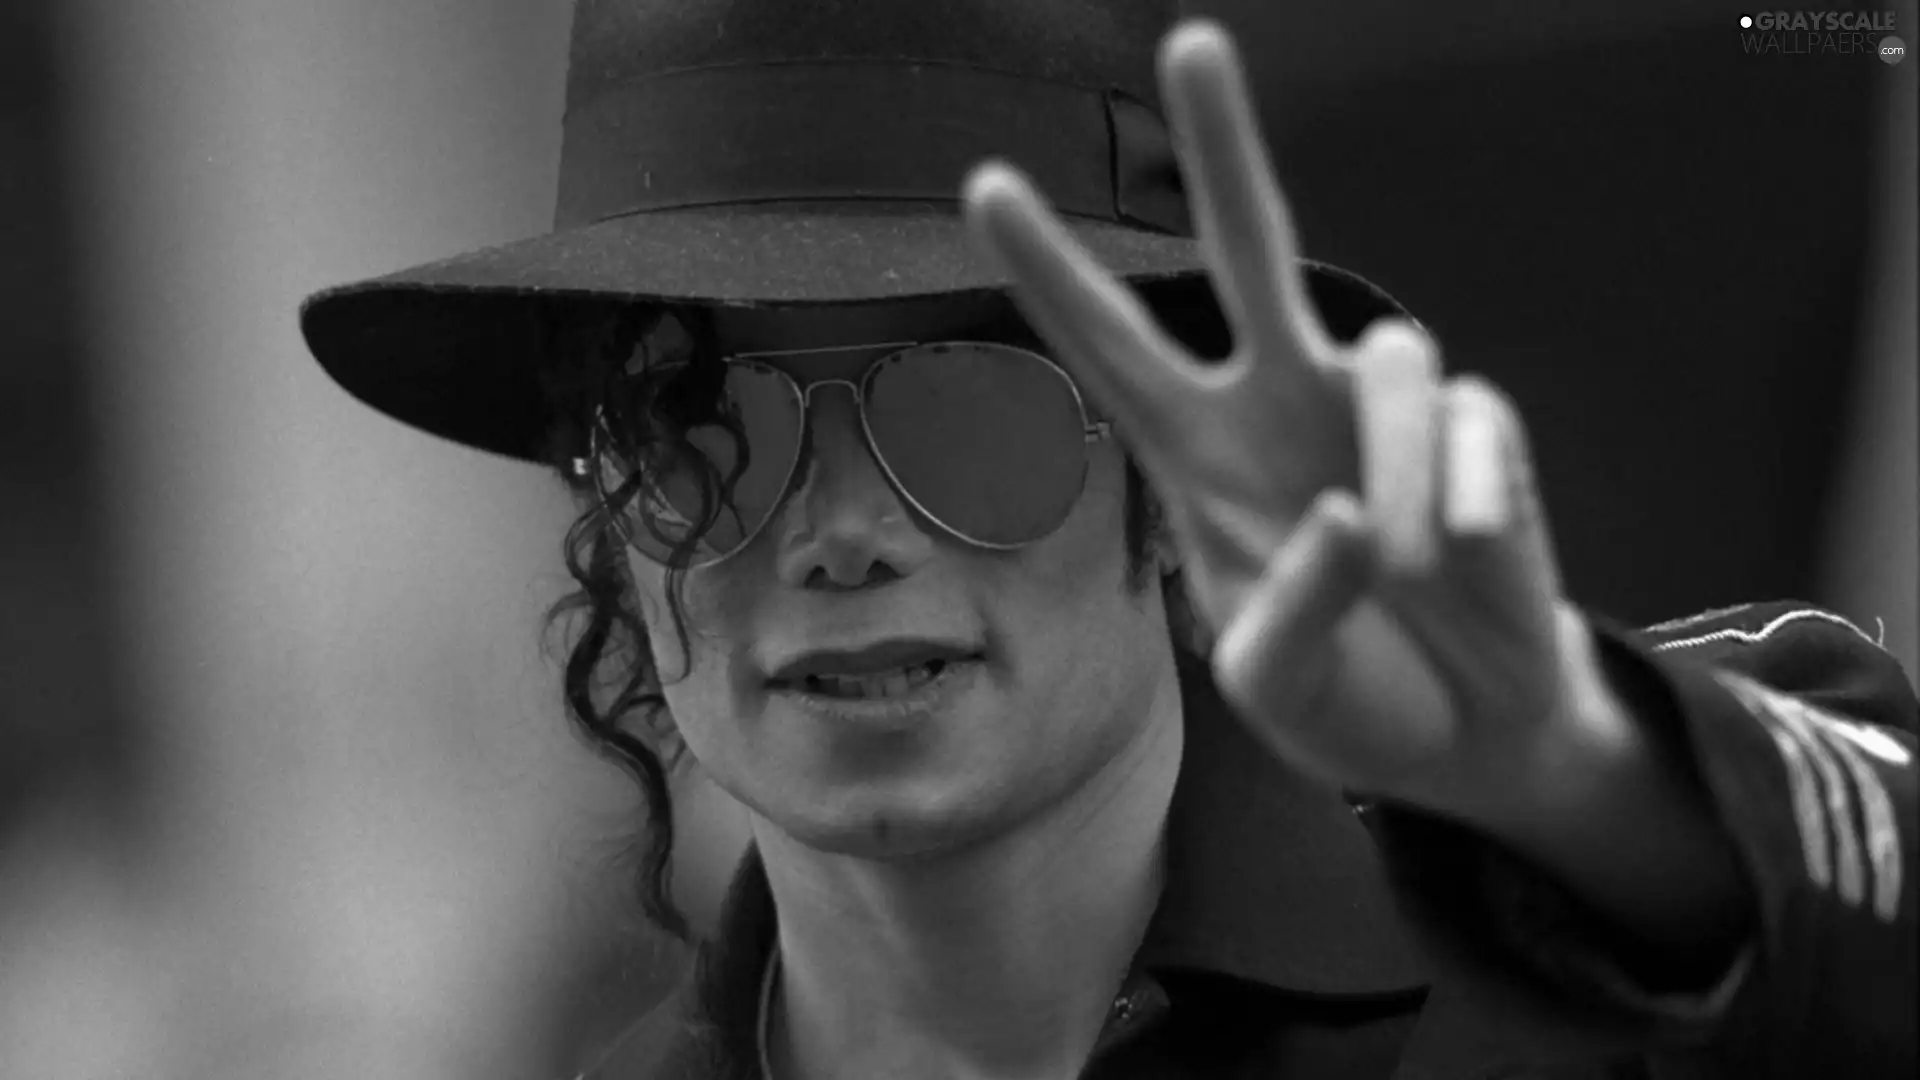 Glasses, Michael Jackson, Hat